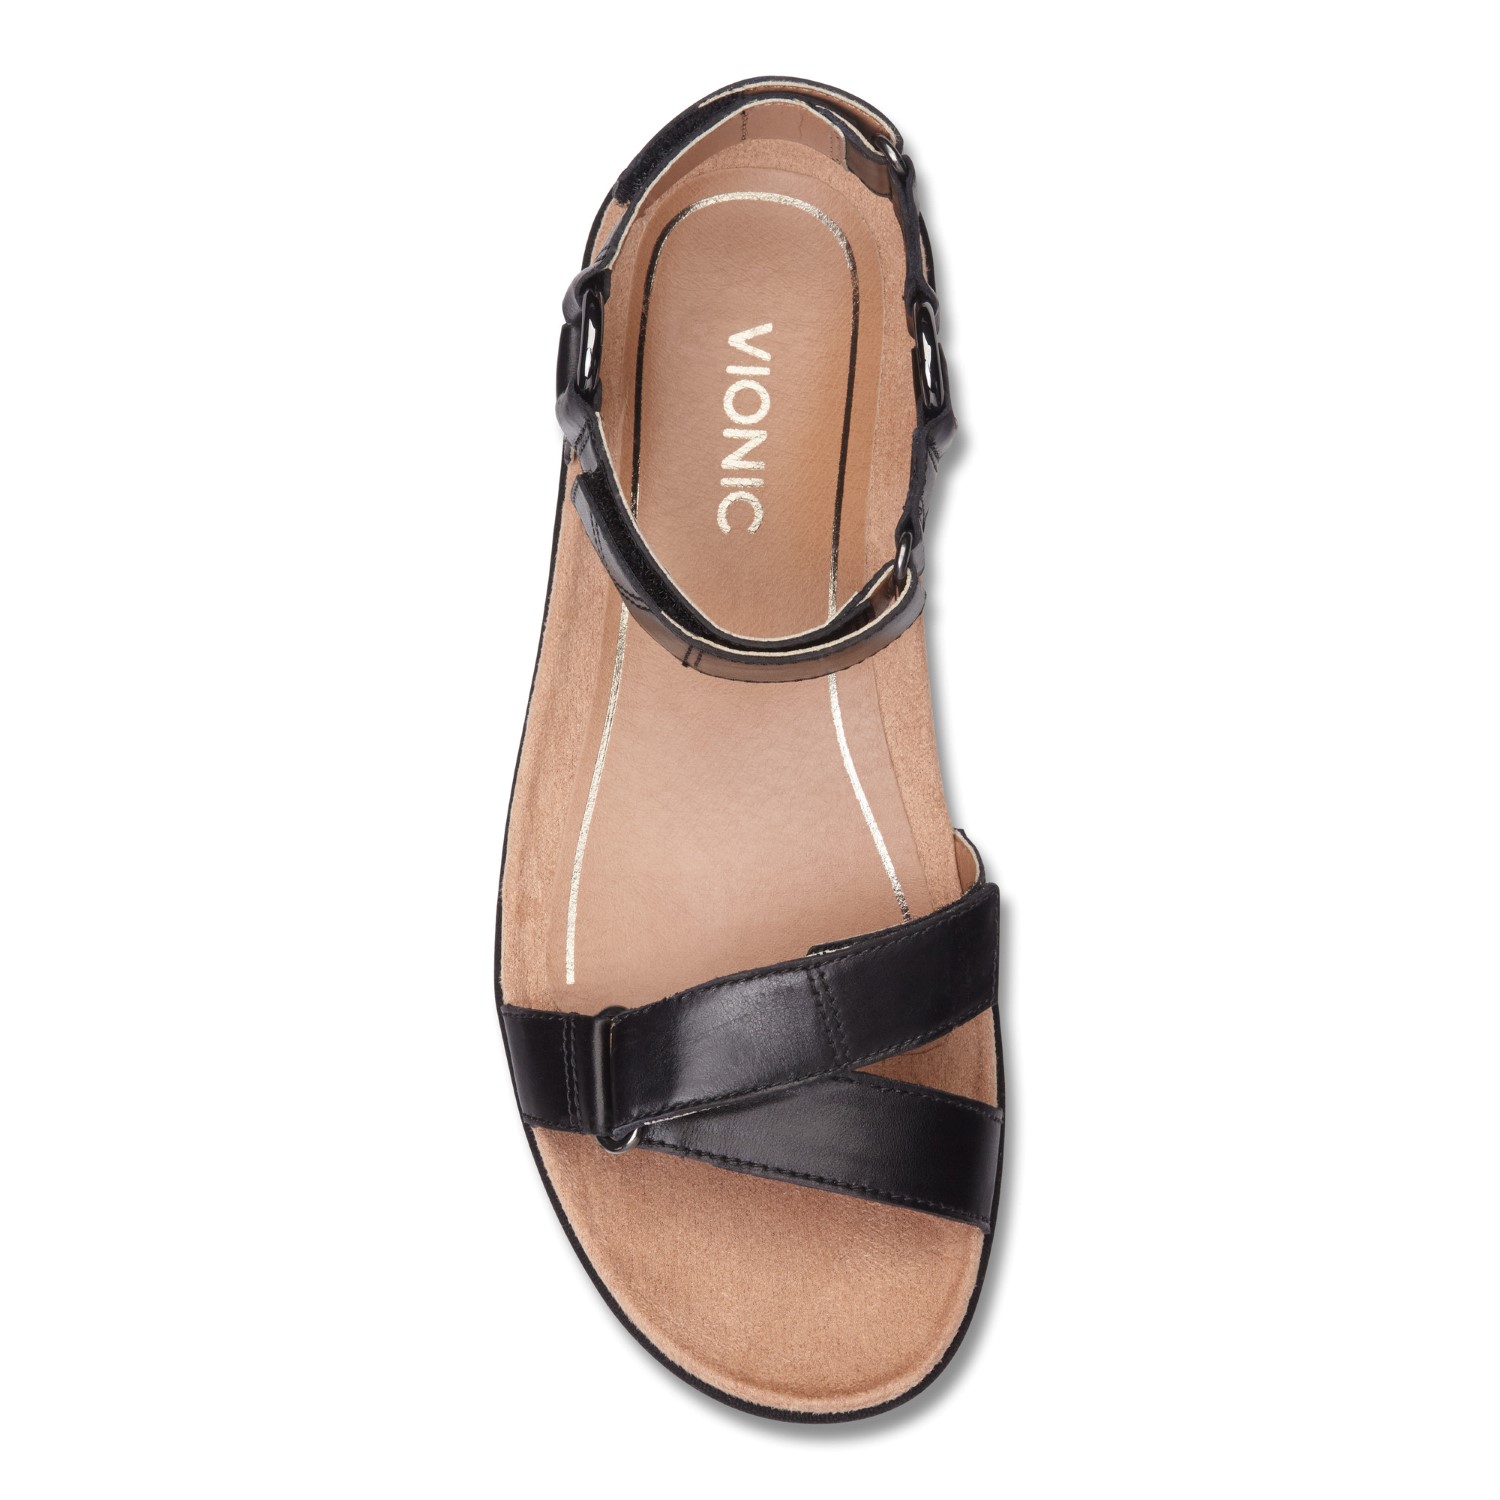 vionic kayan sandals